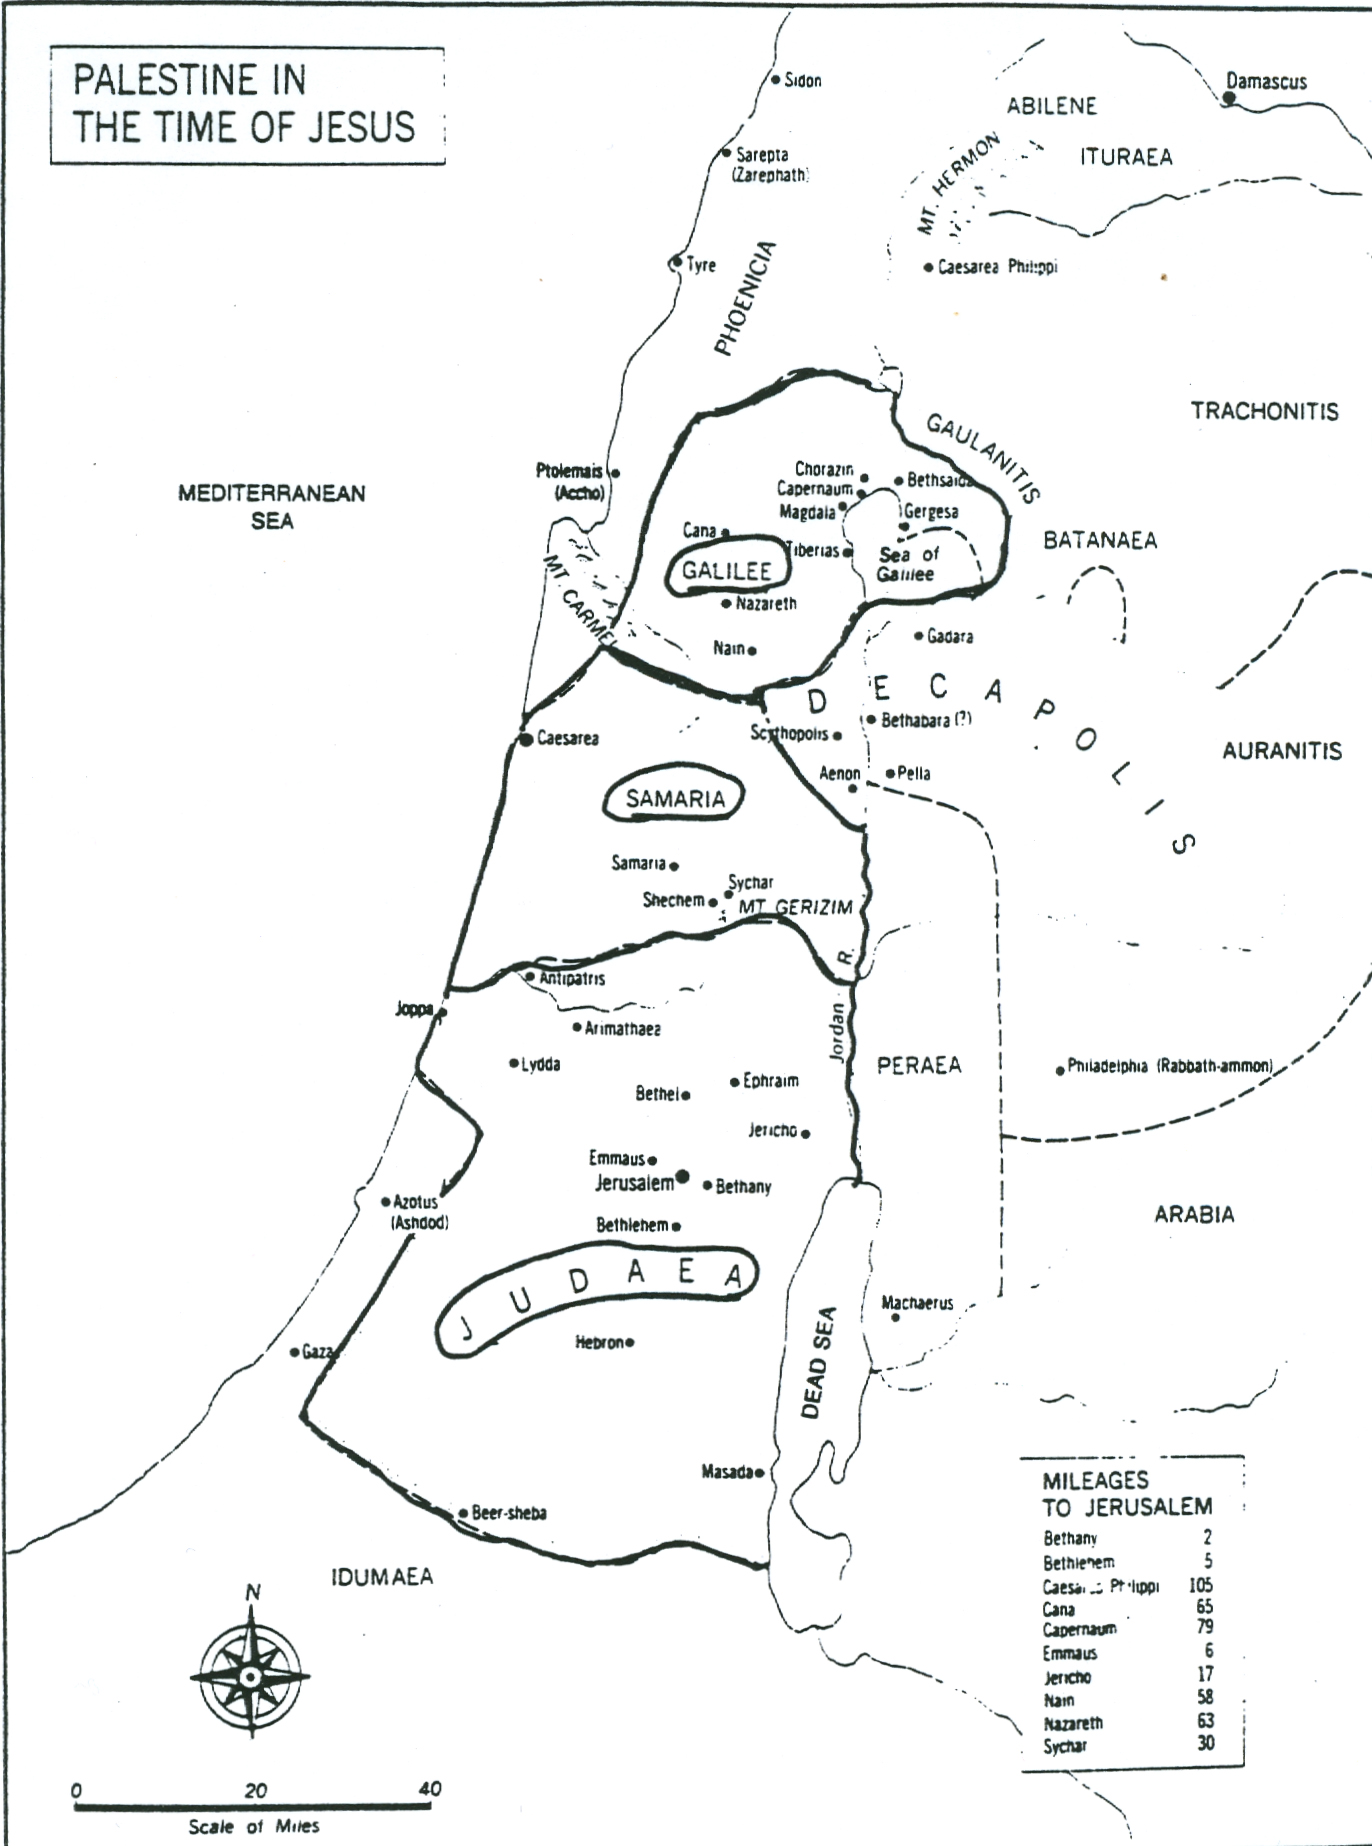 Maps.Palestine